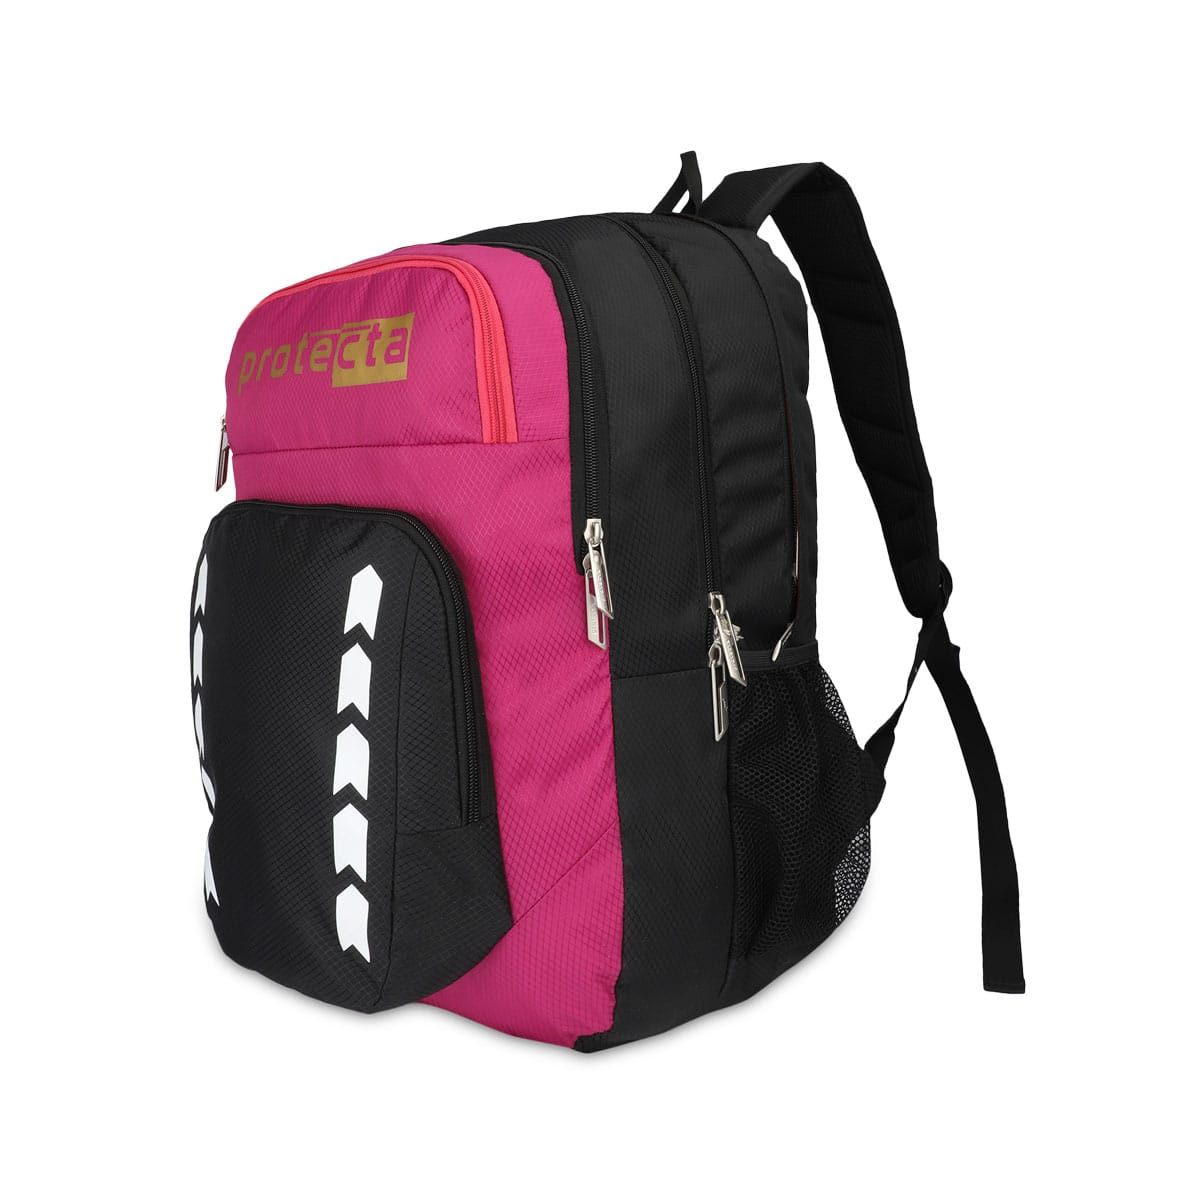 Black-Pink | Protecta Bolt Laptop Backpack-Main